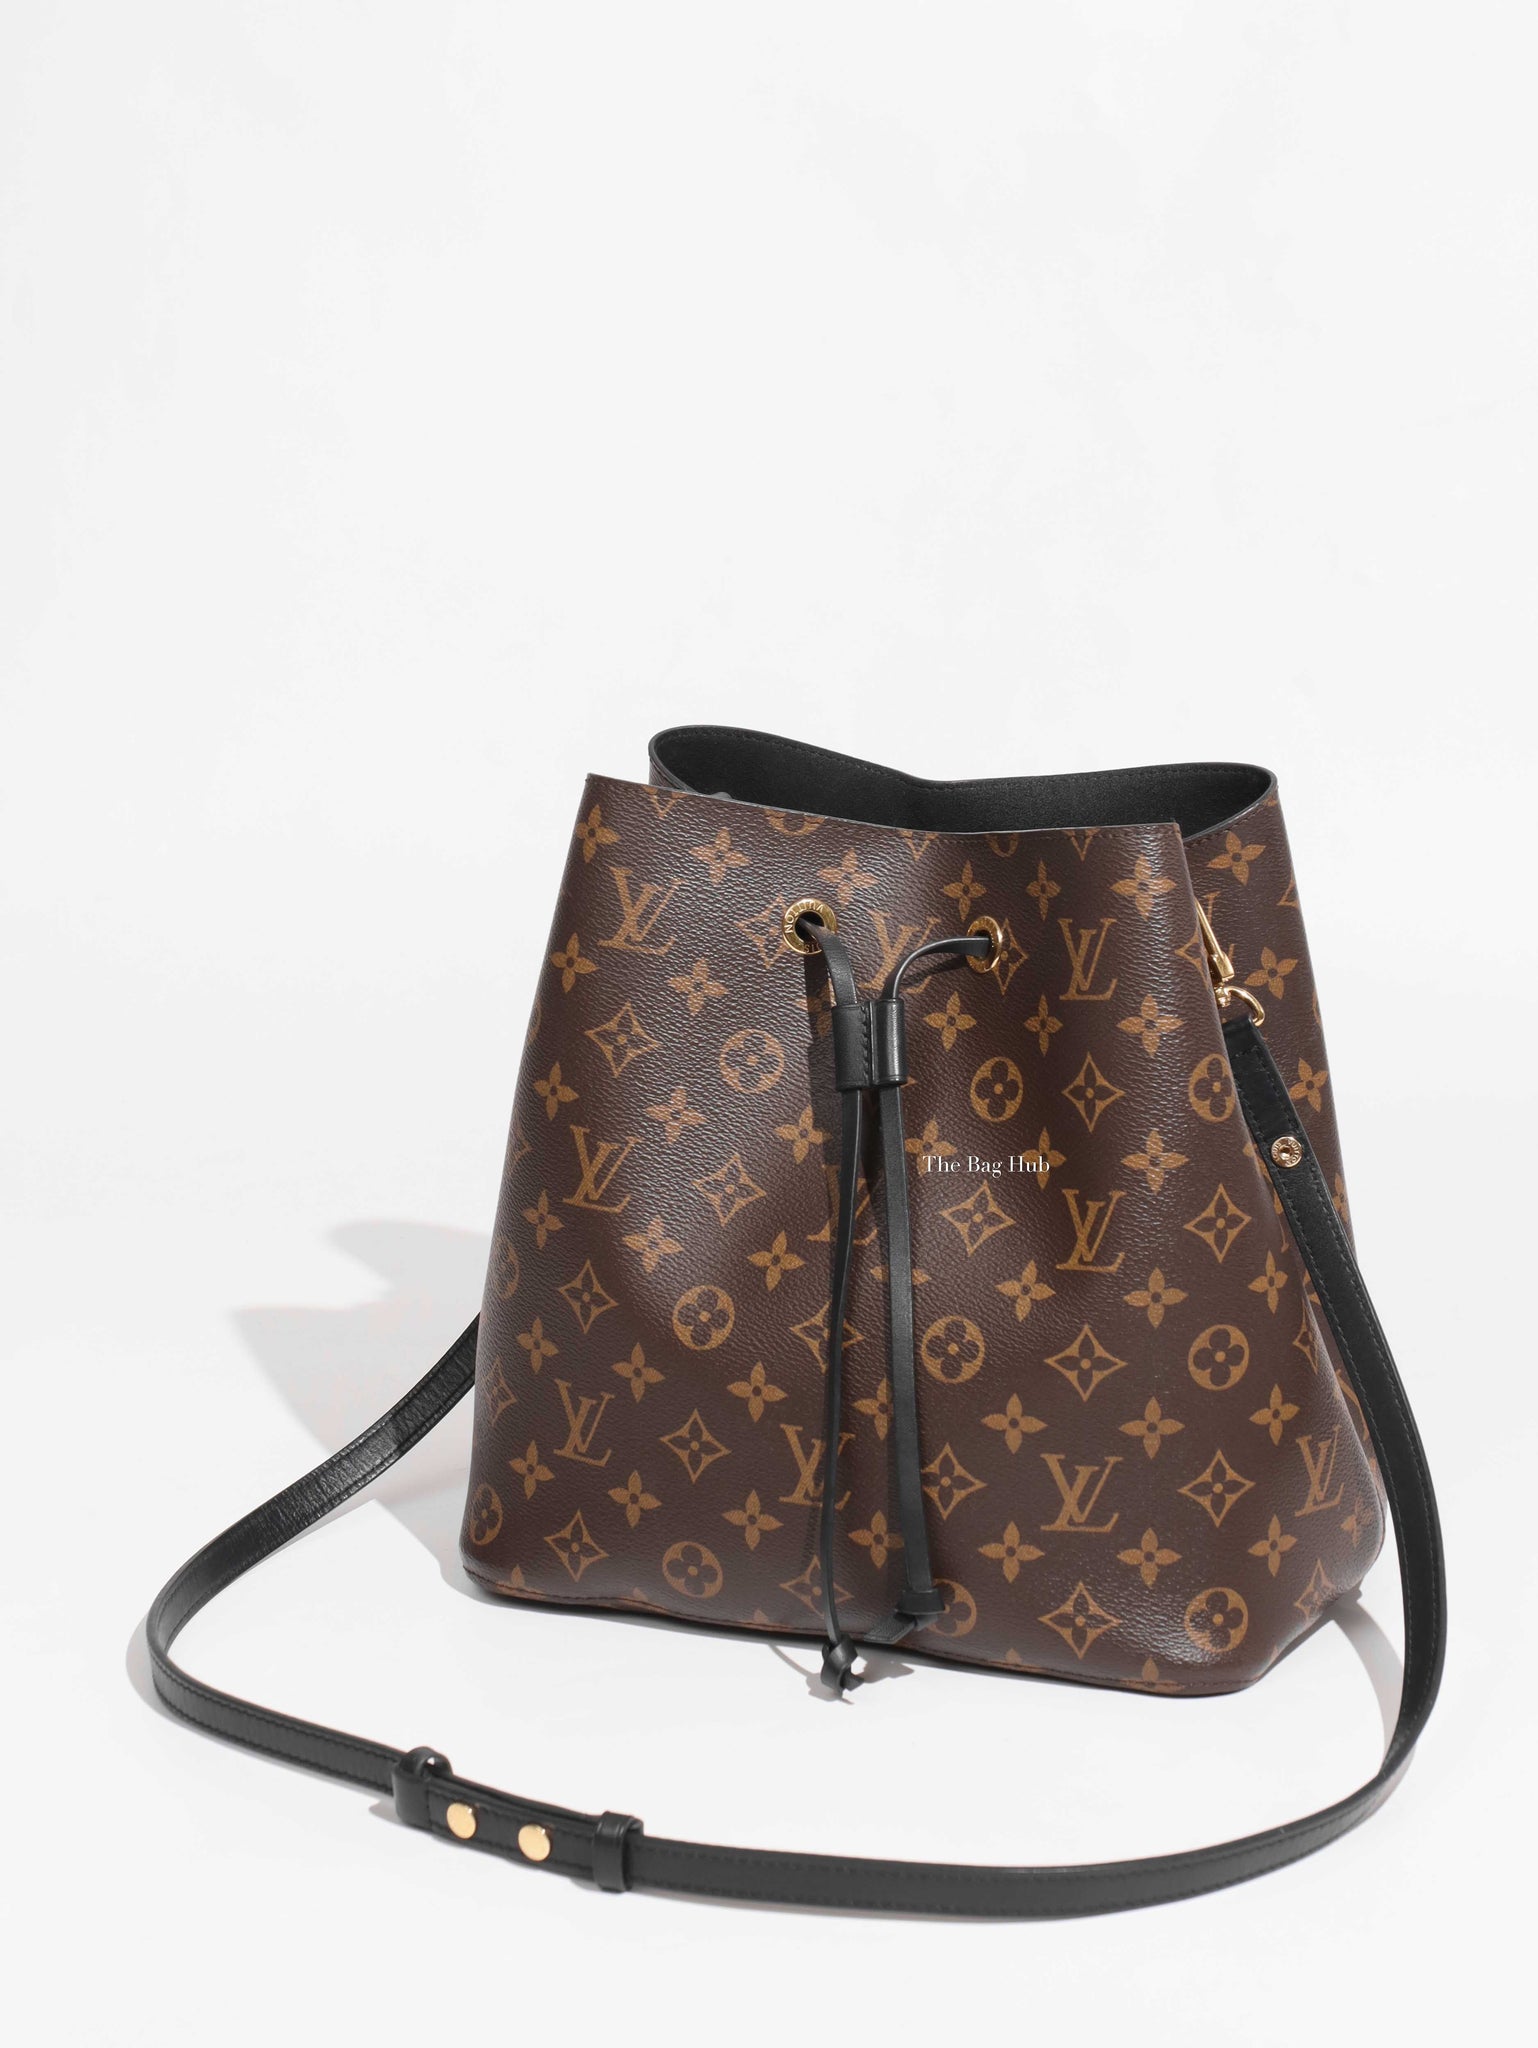 Louis Vuitton Black/Monogram Neo Noe MM Bucket Bag, Designer Brand, Authentic Louis Vuitton